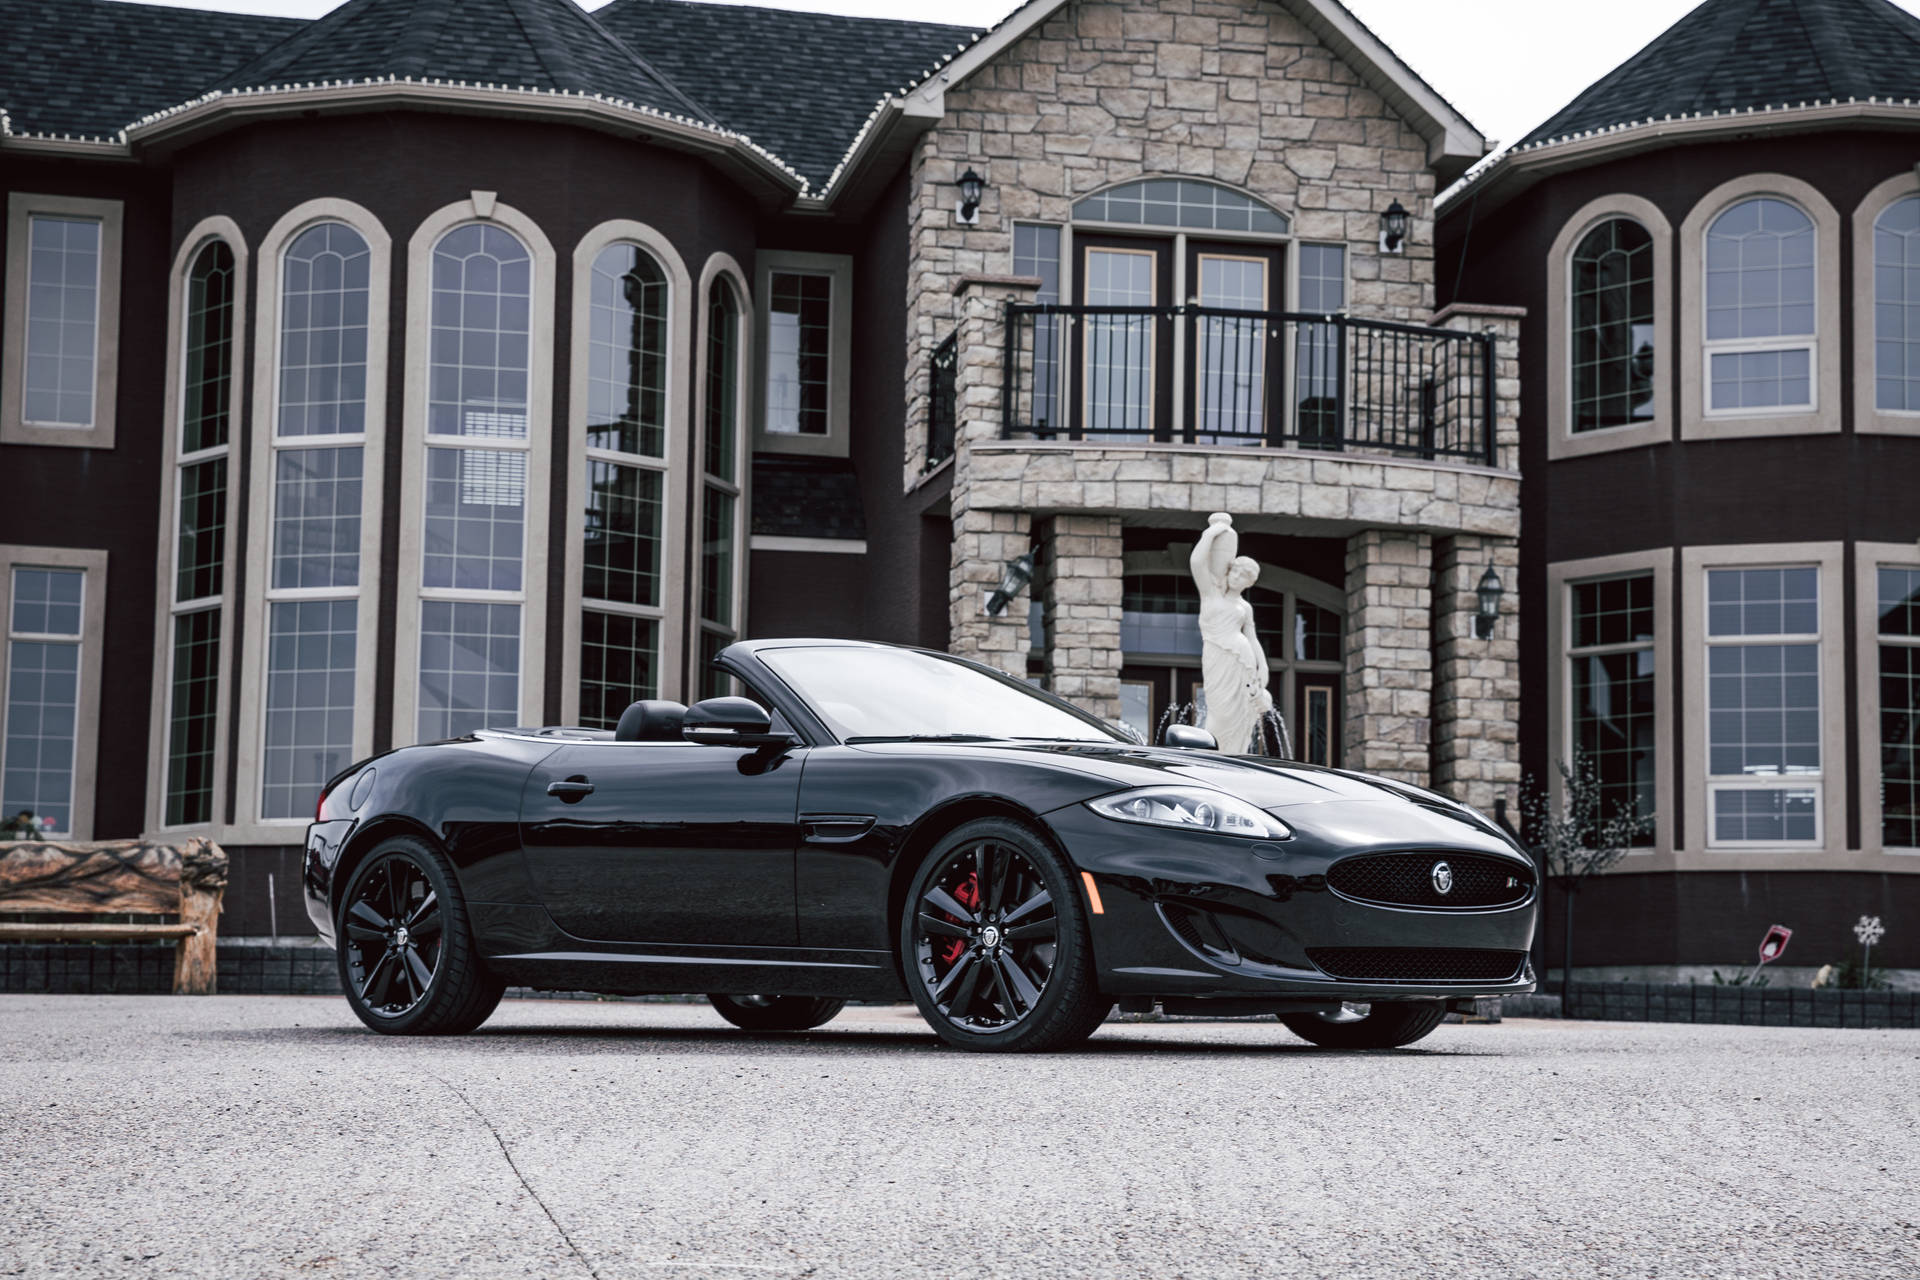 Black Convertible Maserati At Mansion Background